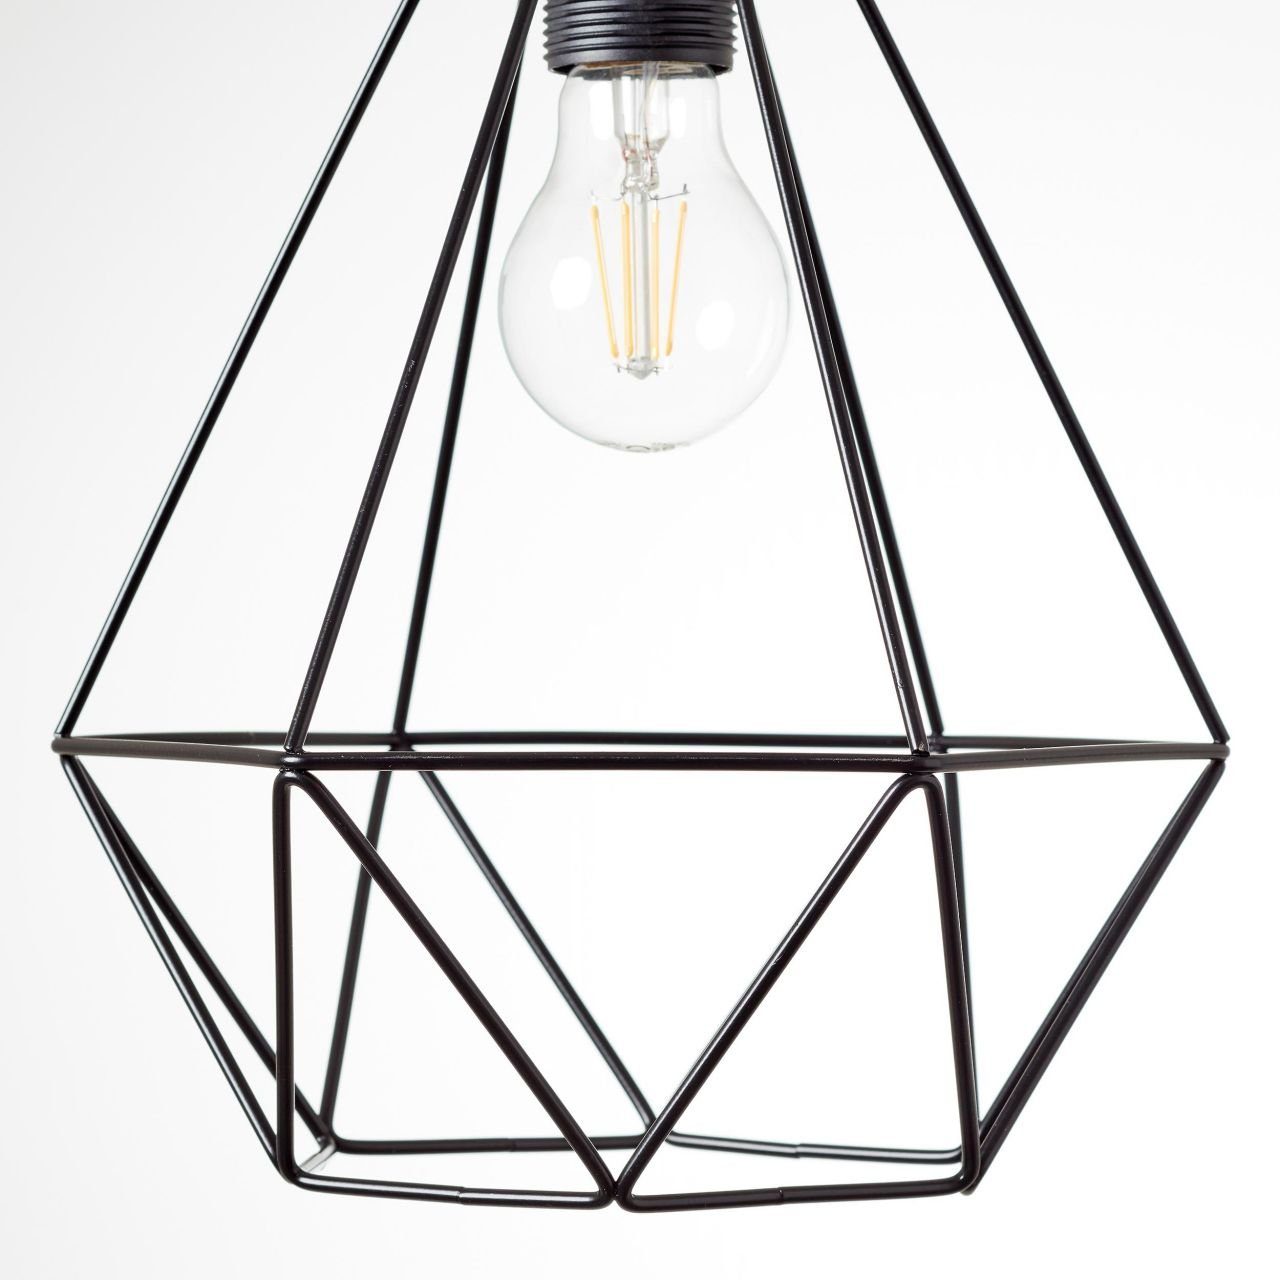 Brilliant Drewno Drewno, 25W A60, schwarz/holzfarbend, 1x Lampe, 25cm Pendelleuchte E27, Pendelleuchte